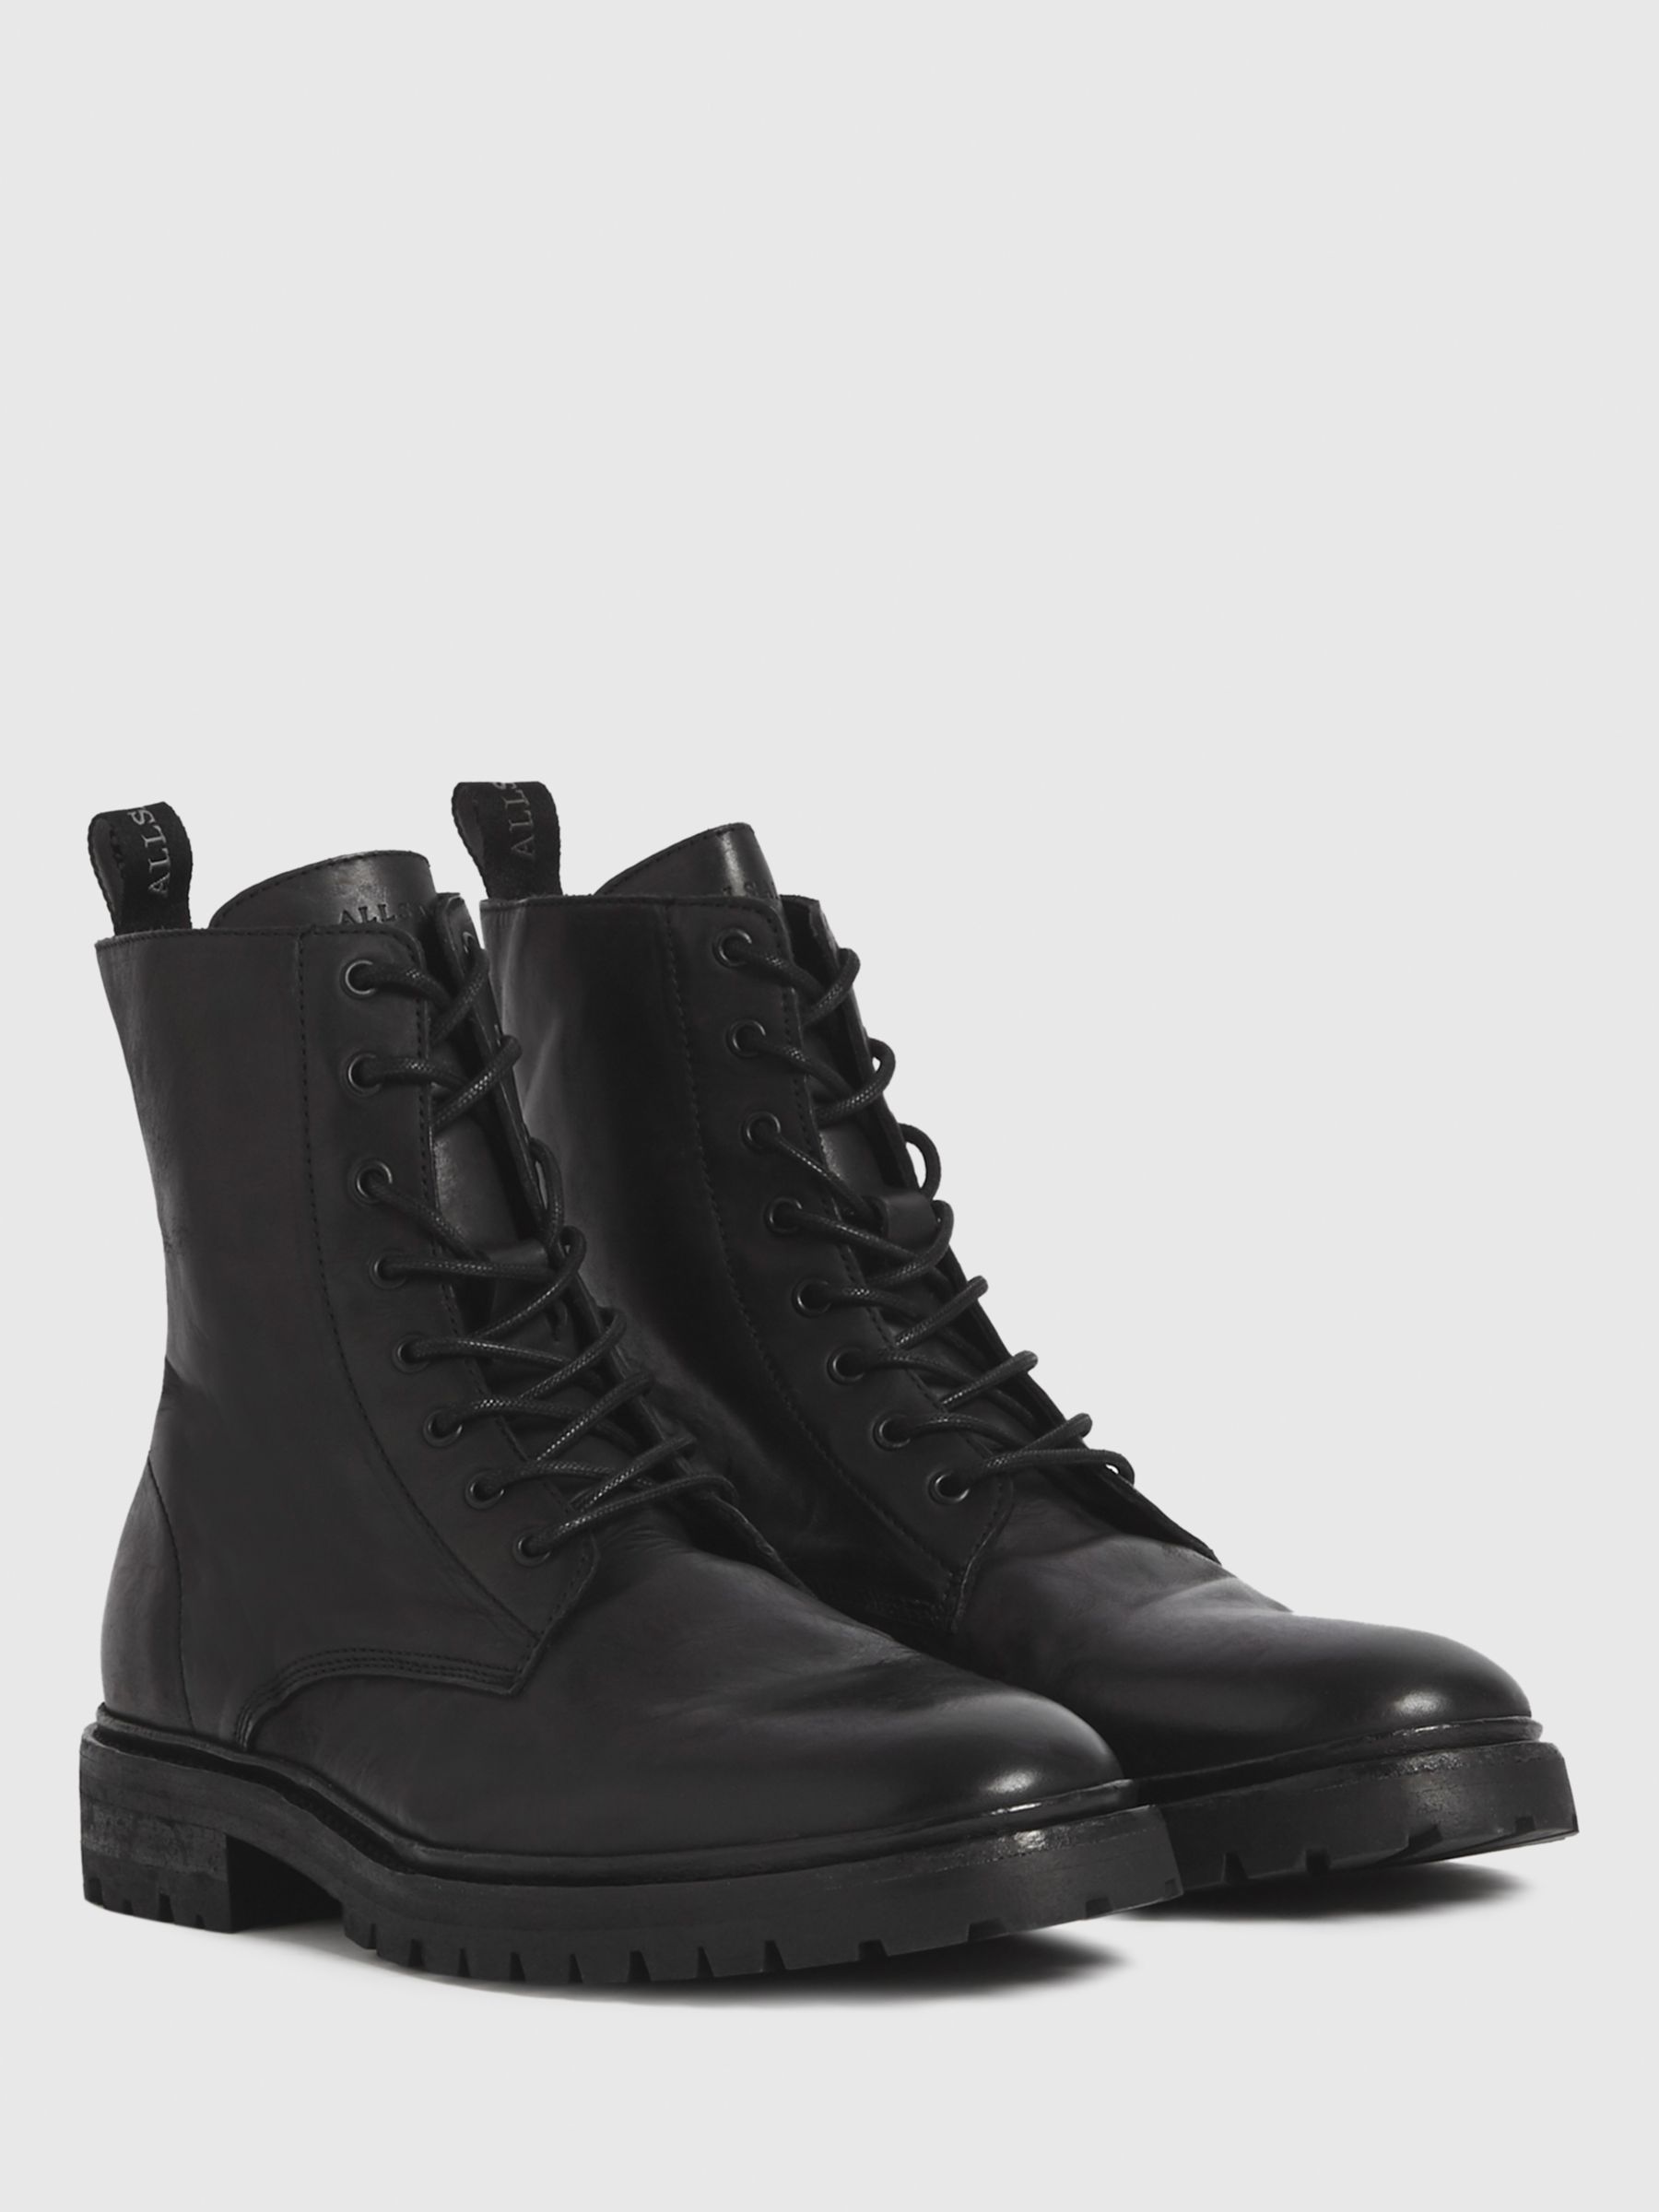 AllSaints Tobias Leather Military Boots, Black at John Lewis & Partners